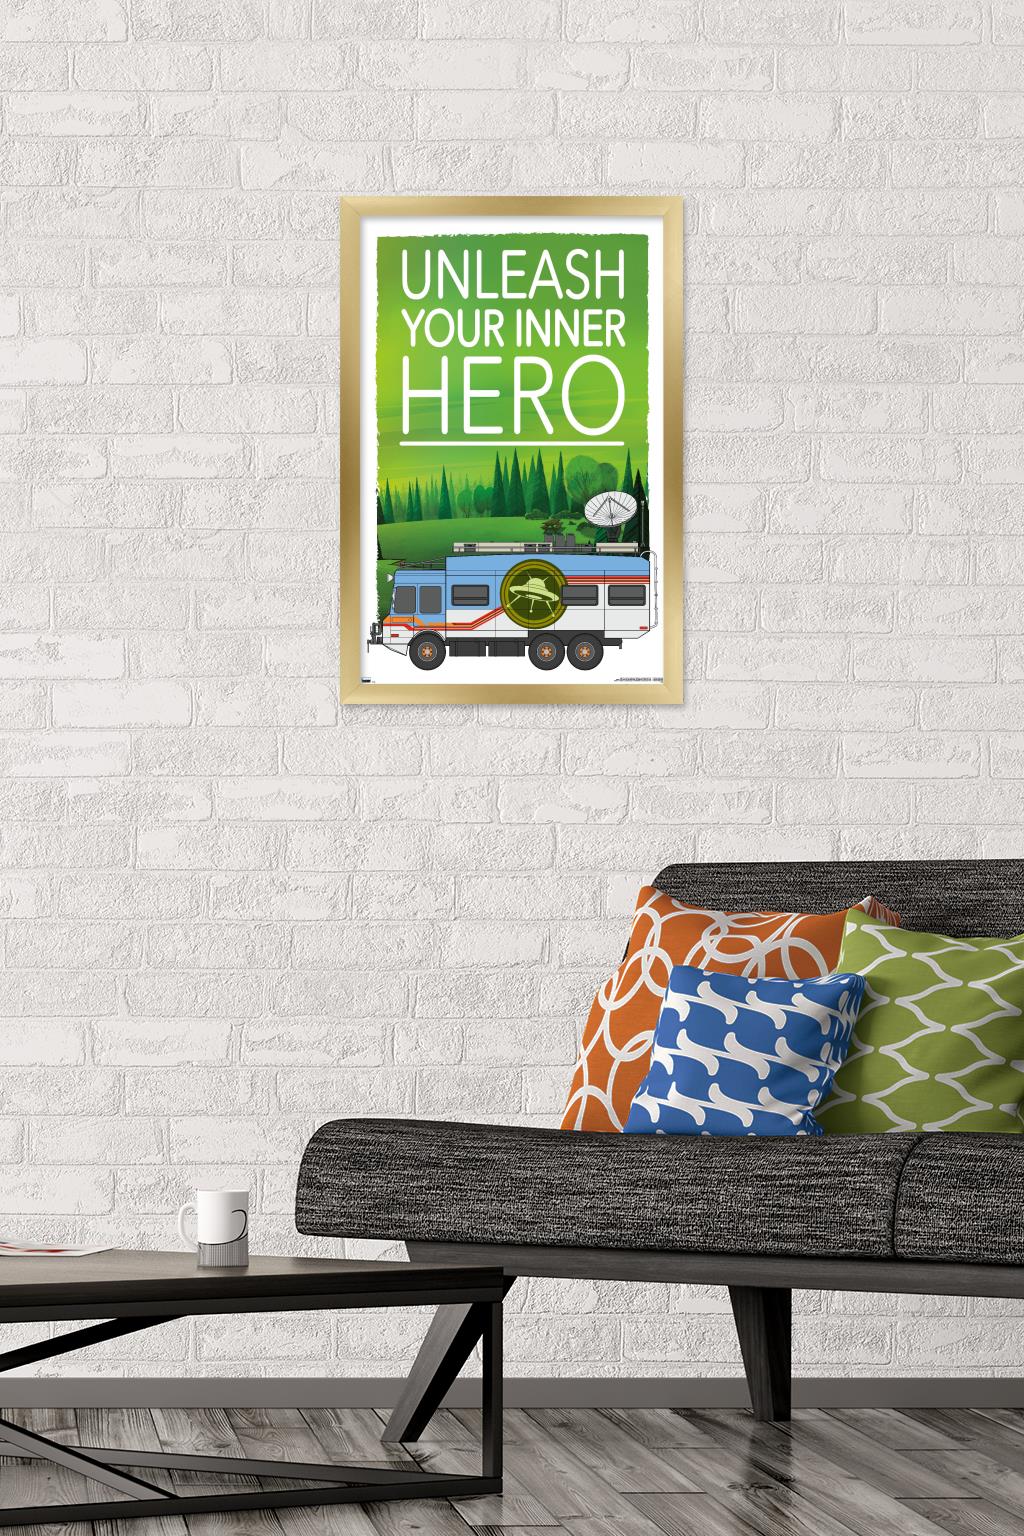 Ben 10 - Go Hero Wall Poster, 14.725" x 22.375", Framed - image 2 of 5